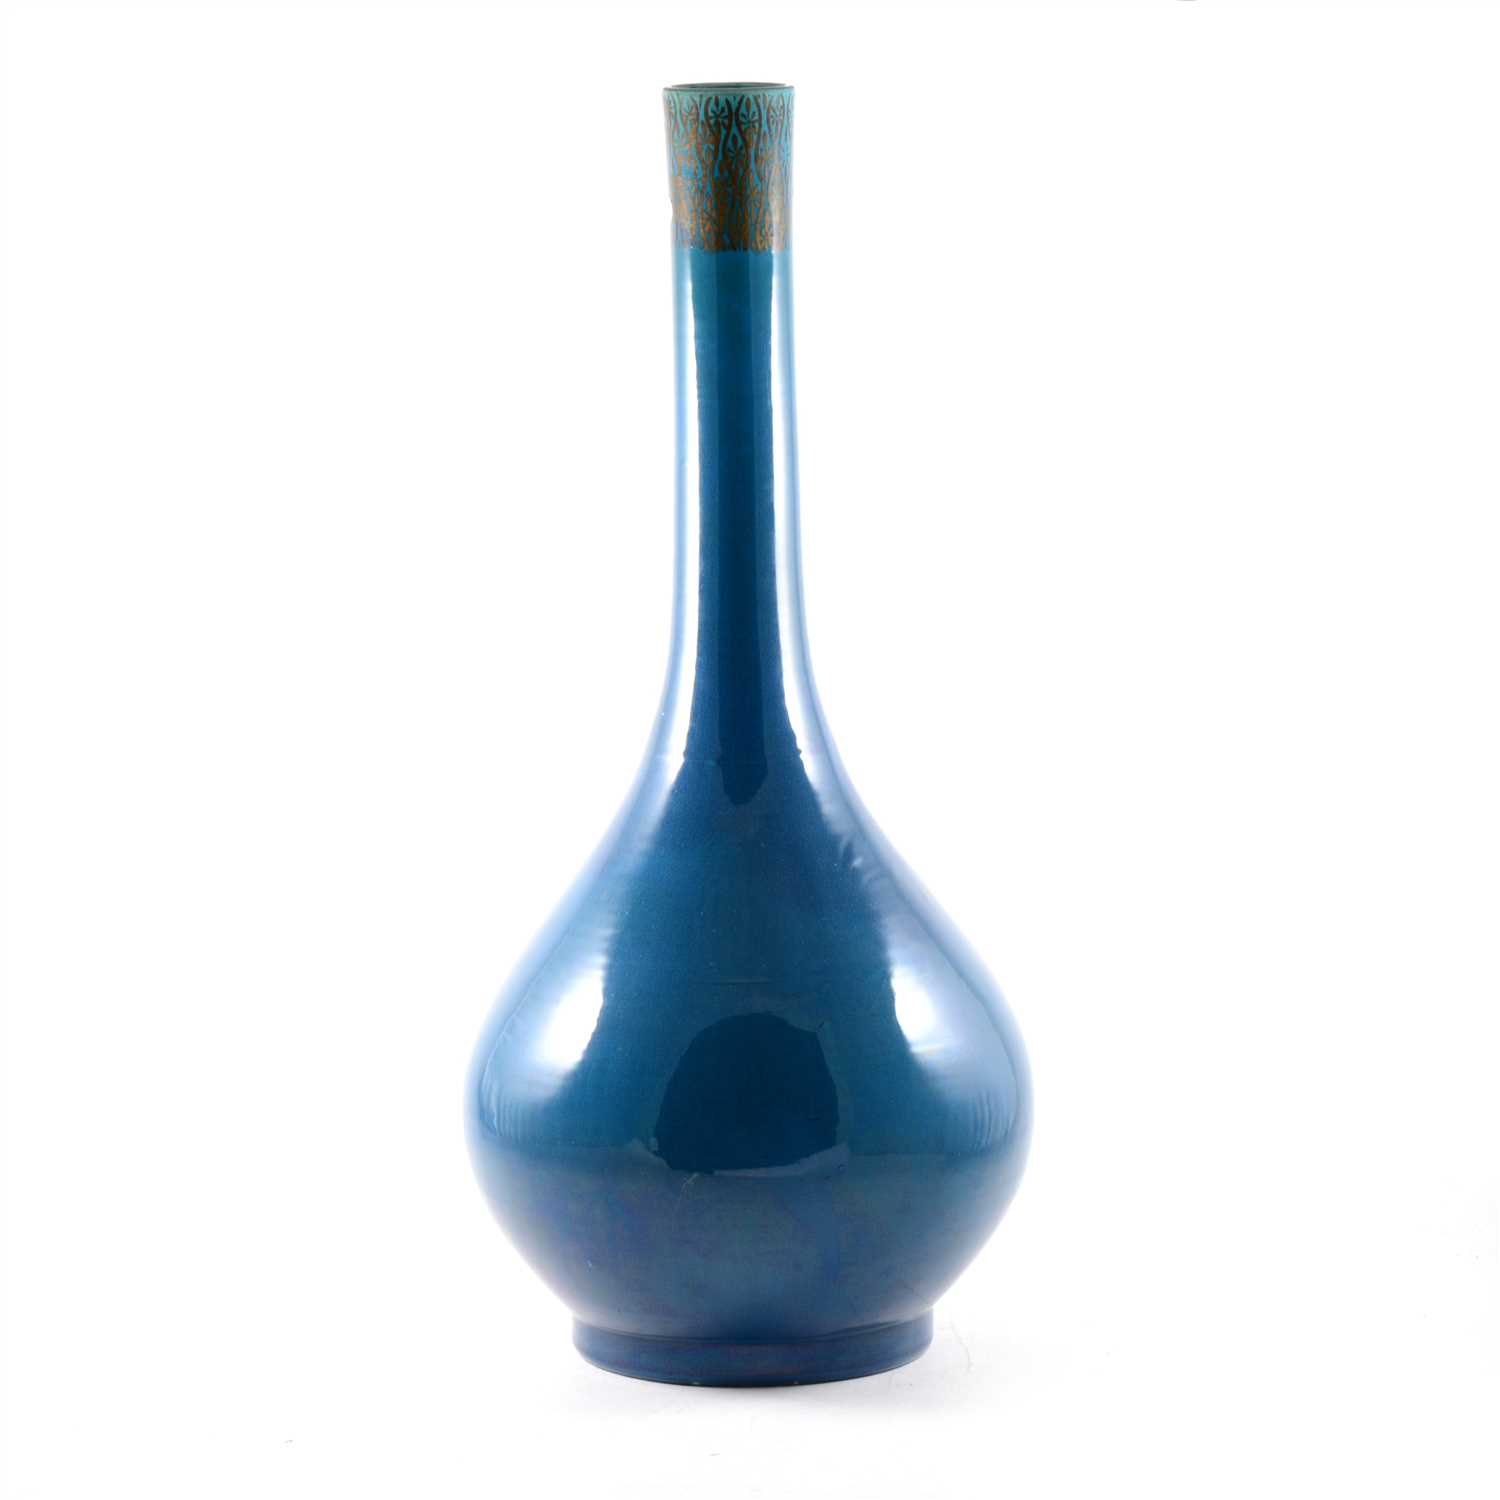 Lot 67 - English pottery monochrome floor vase, pear-shape, decorated collar, 66cm.